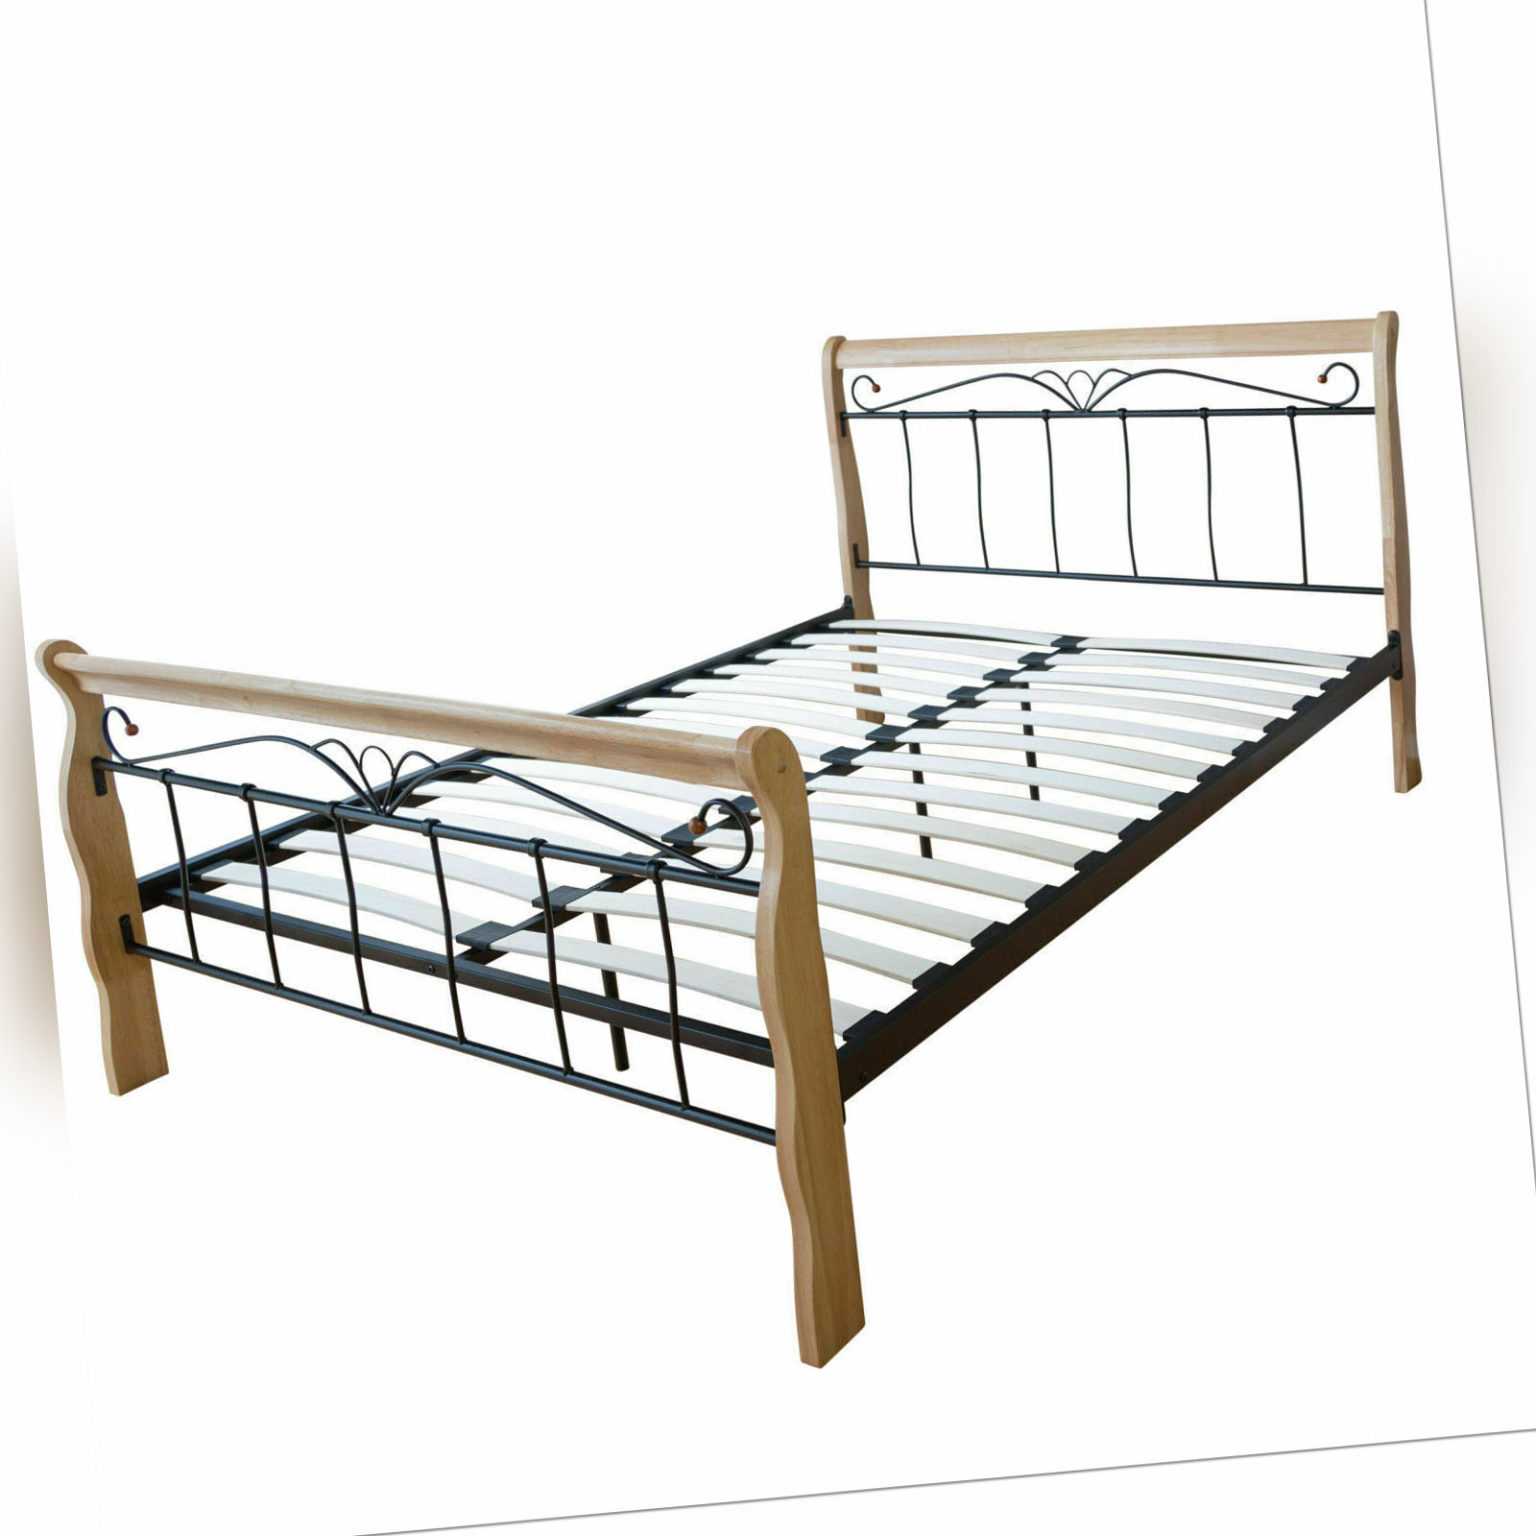 Metall Doppelbett Ehebett massiv Rahmen Lattenrost Holz 160 x 200 Homestyle4u